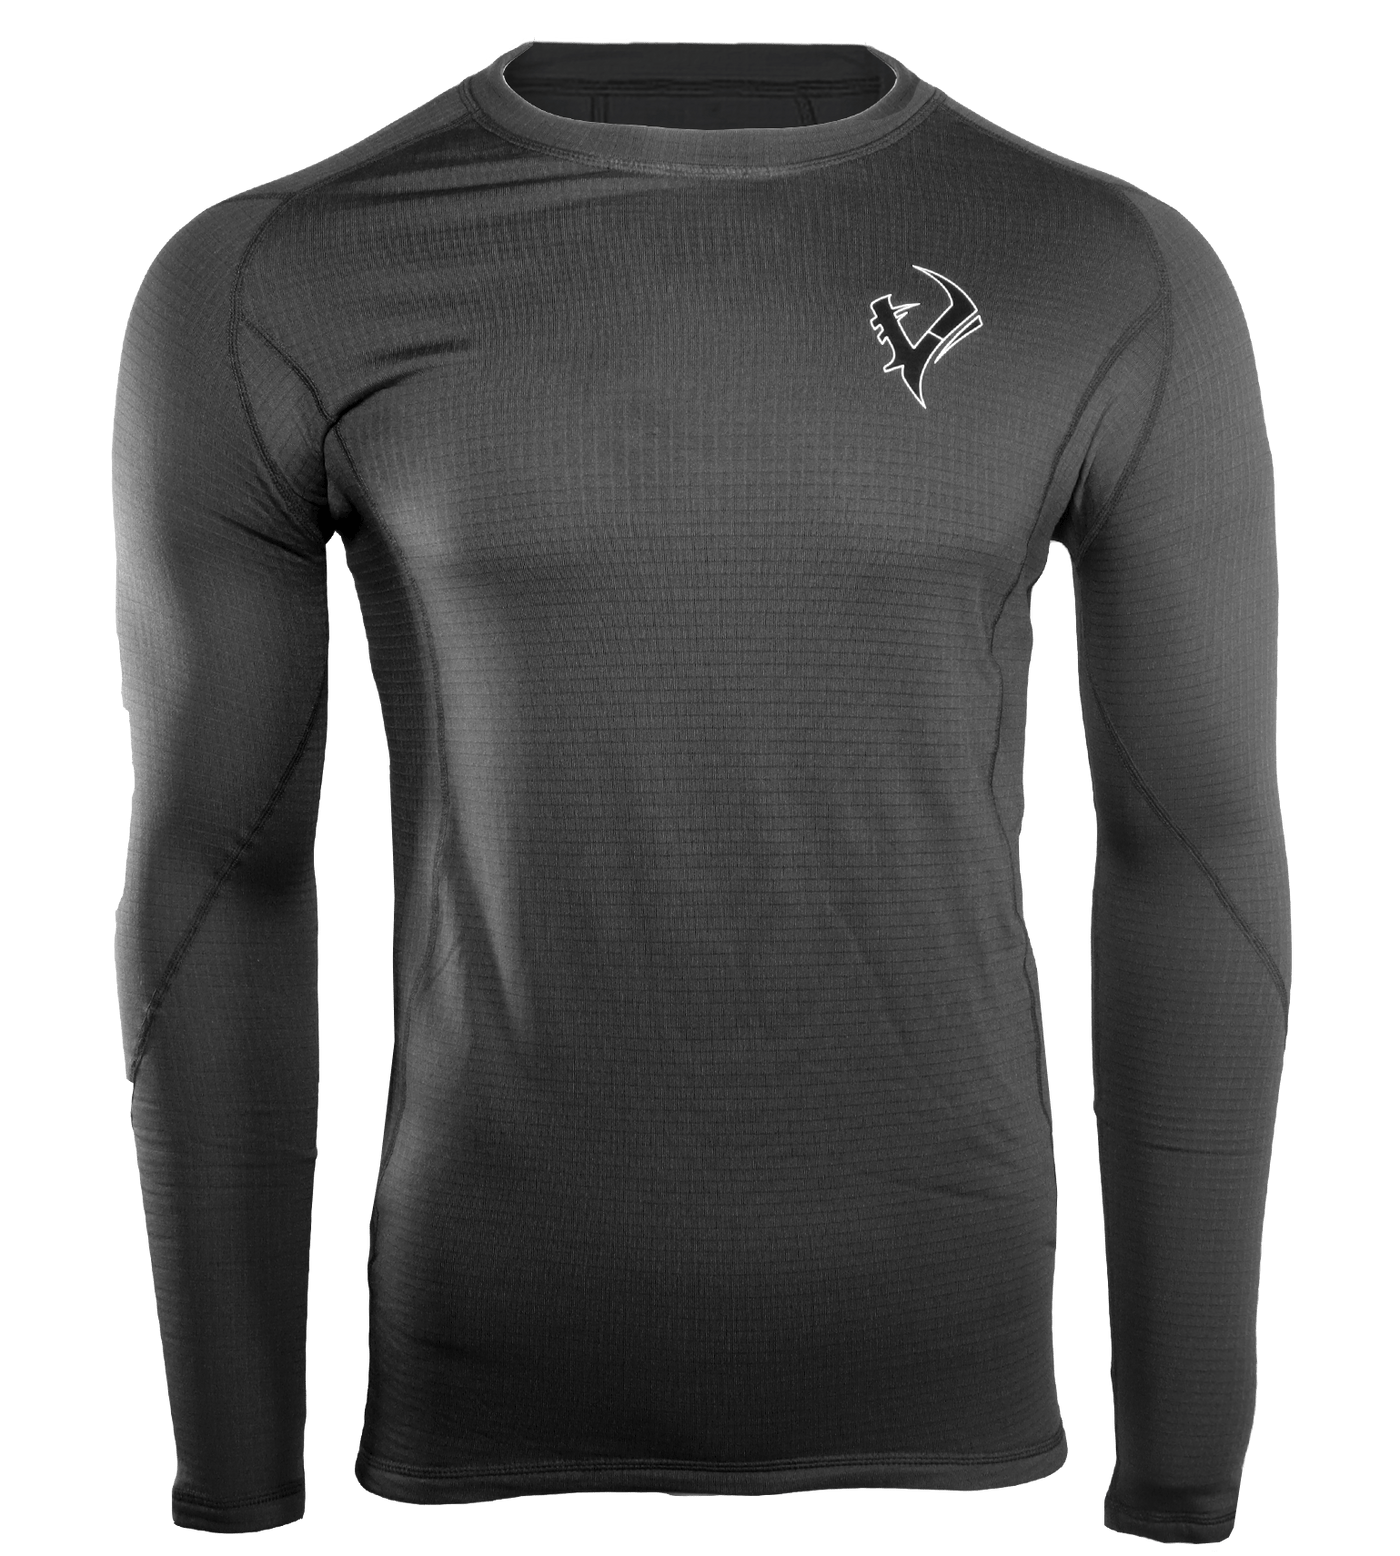 Pyrex Extreme Shirt - Charcoal - Vycah